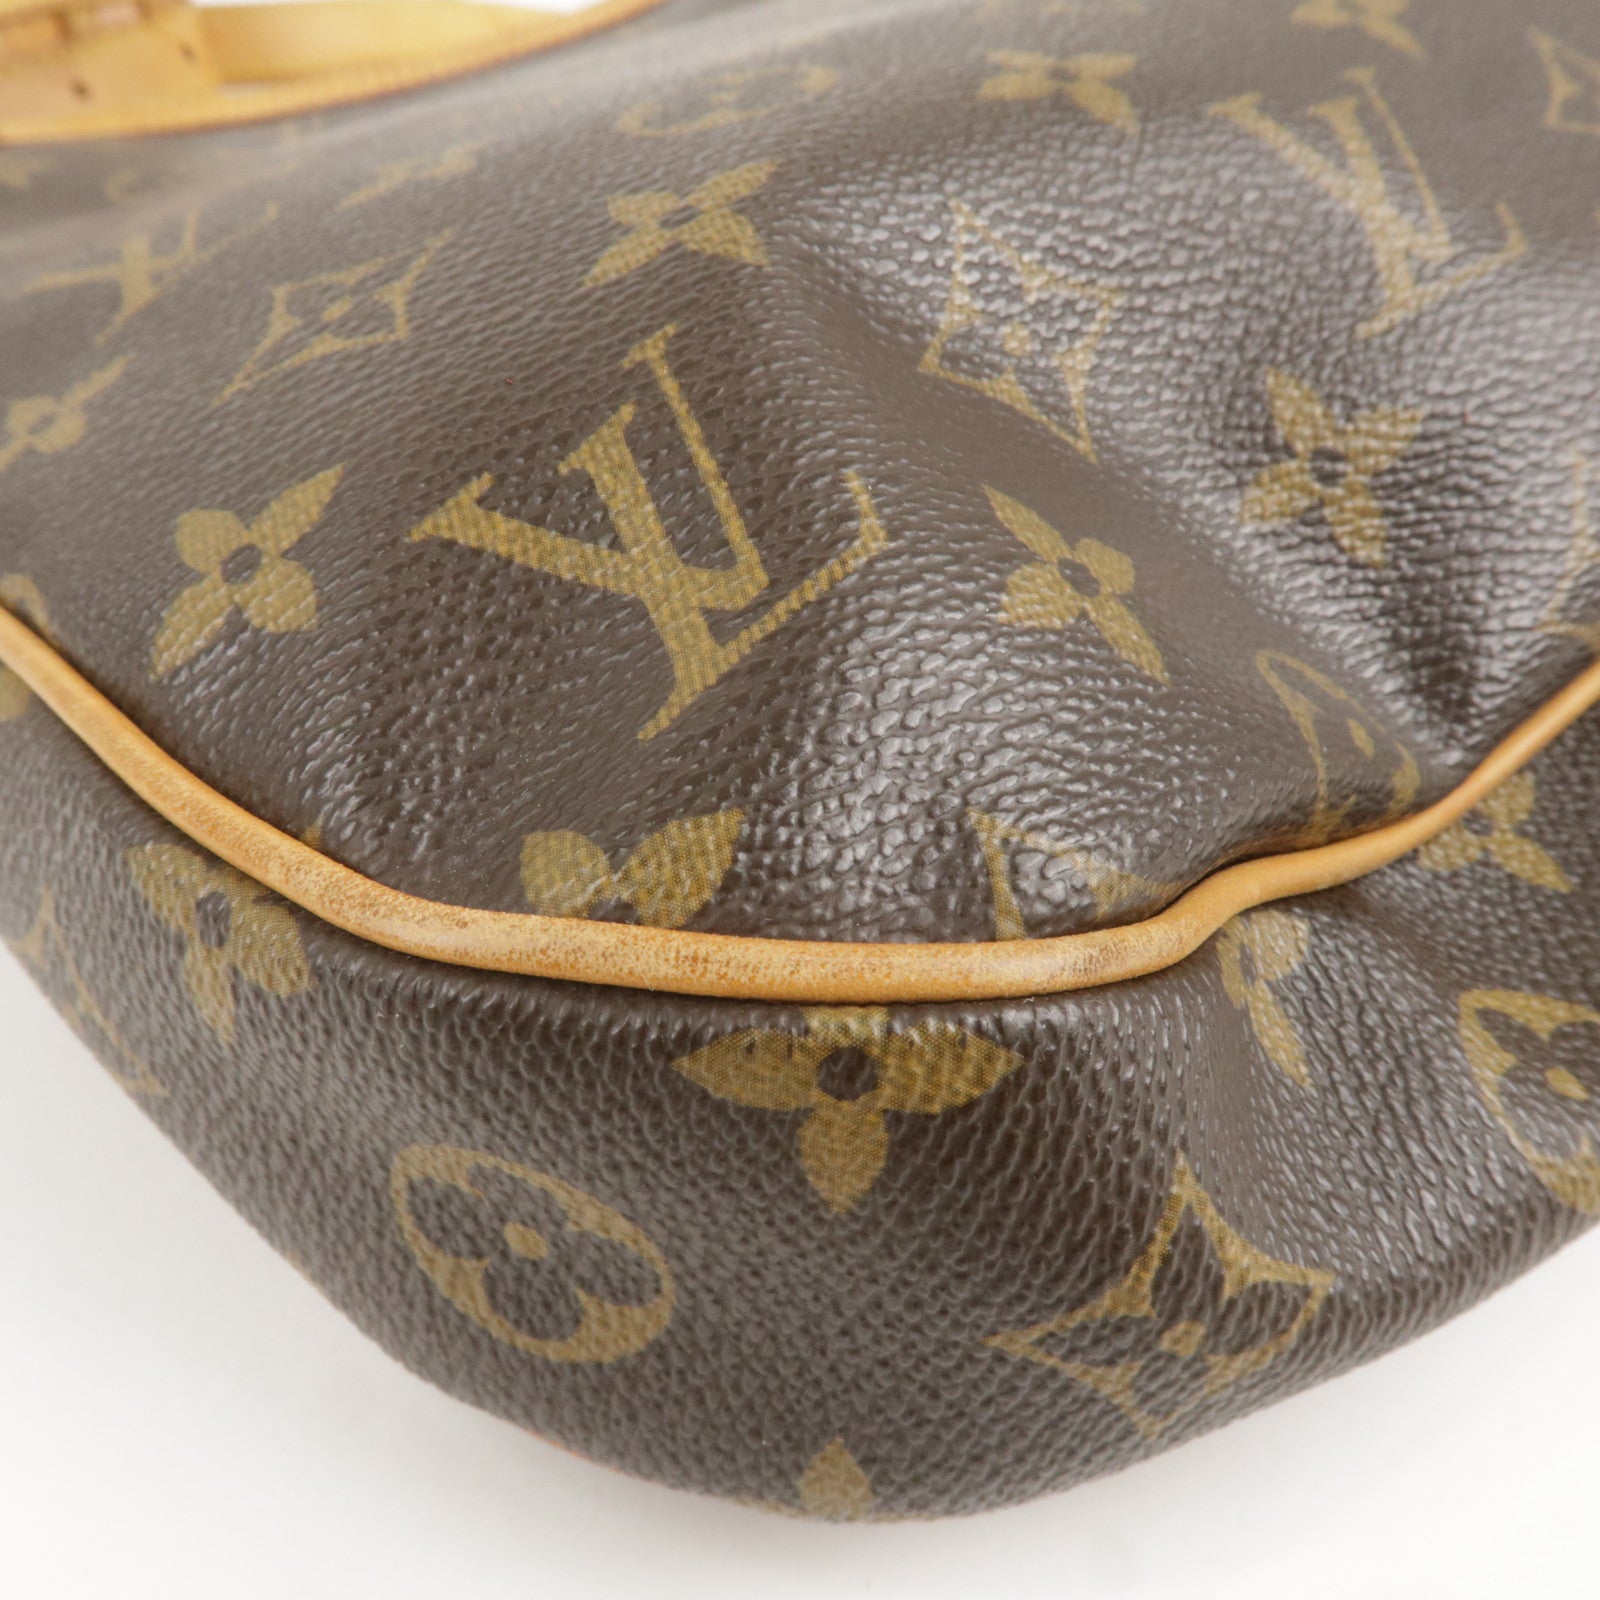 Monogram - M56389 – dct - ep_vintage luxury Store - Vuitton - MM